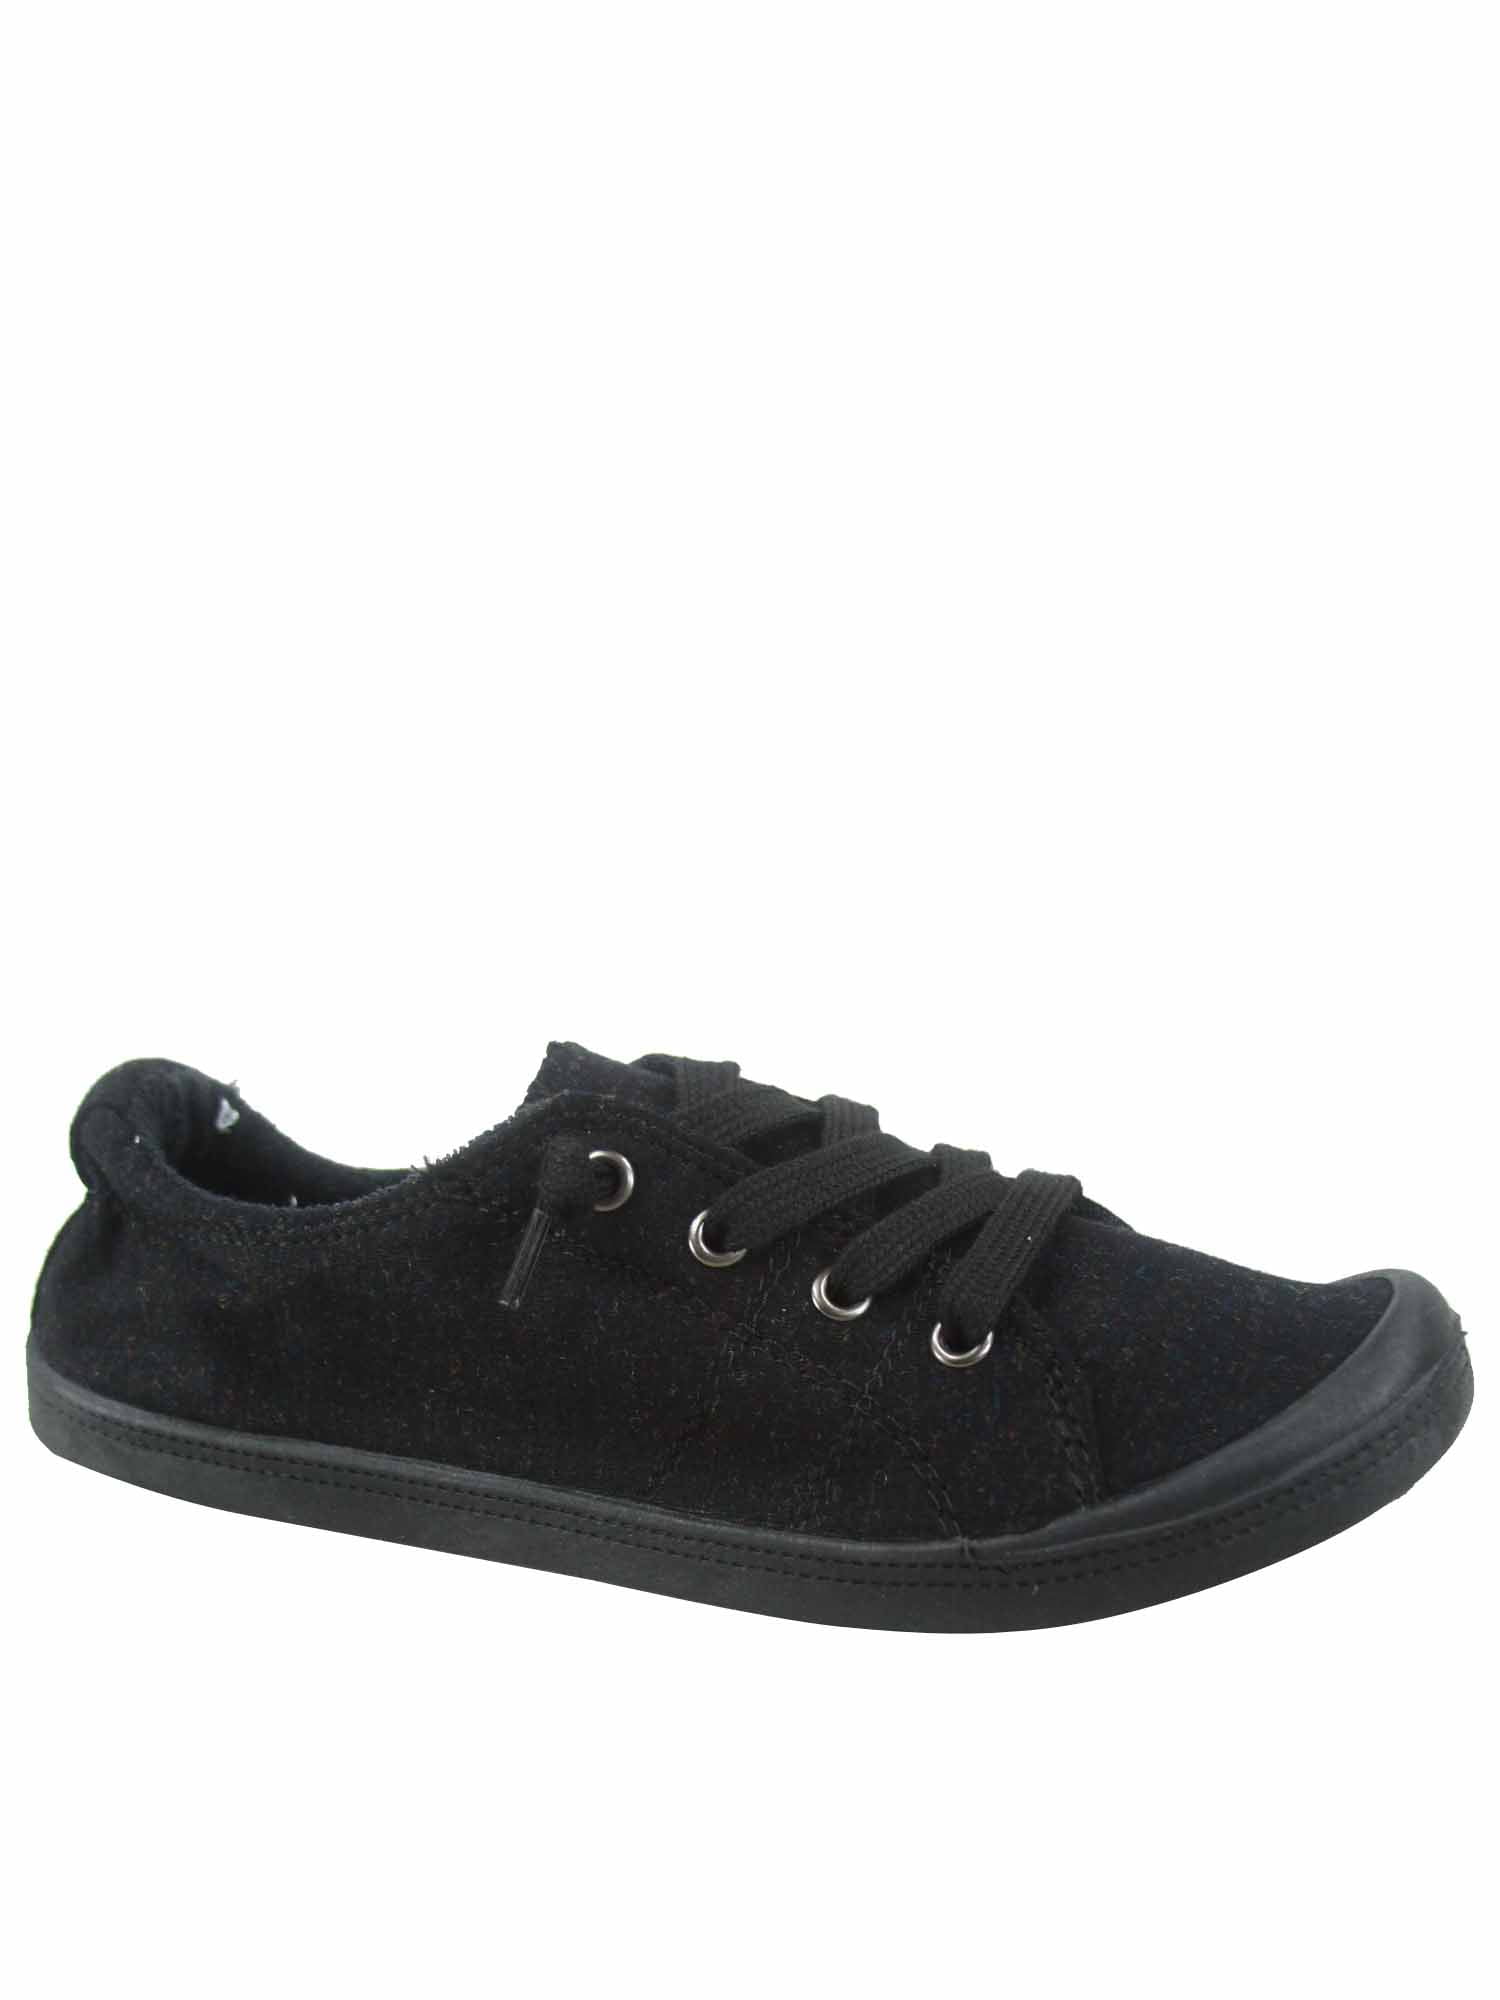 black flat sneaker shoes